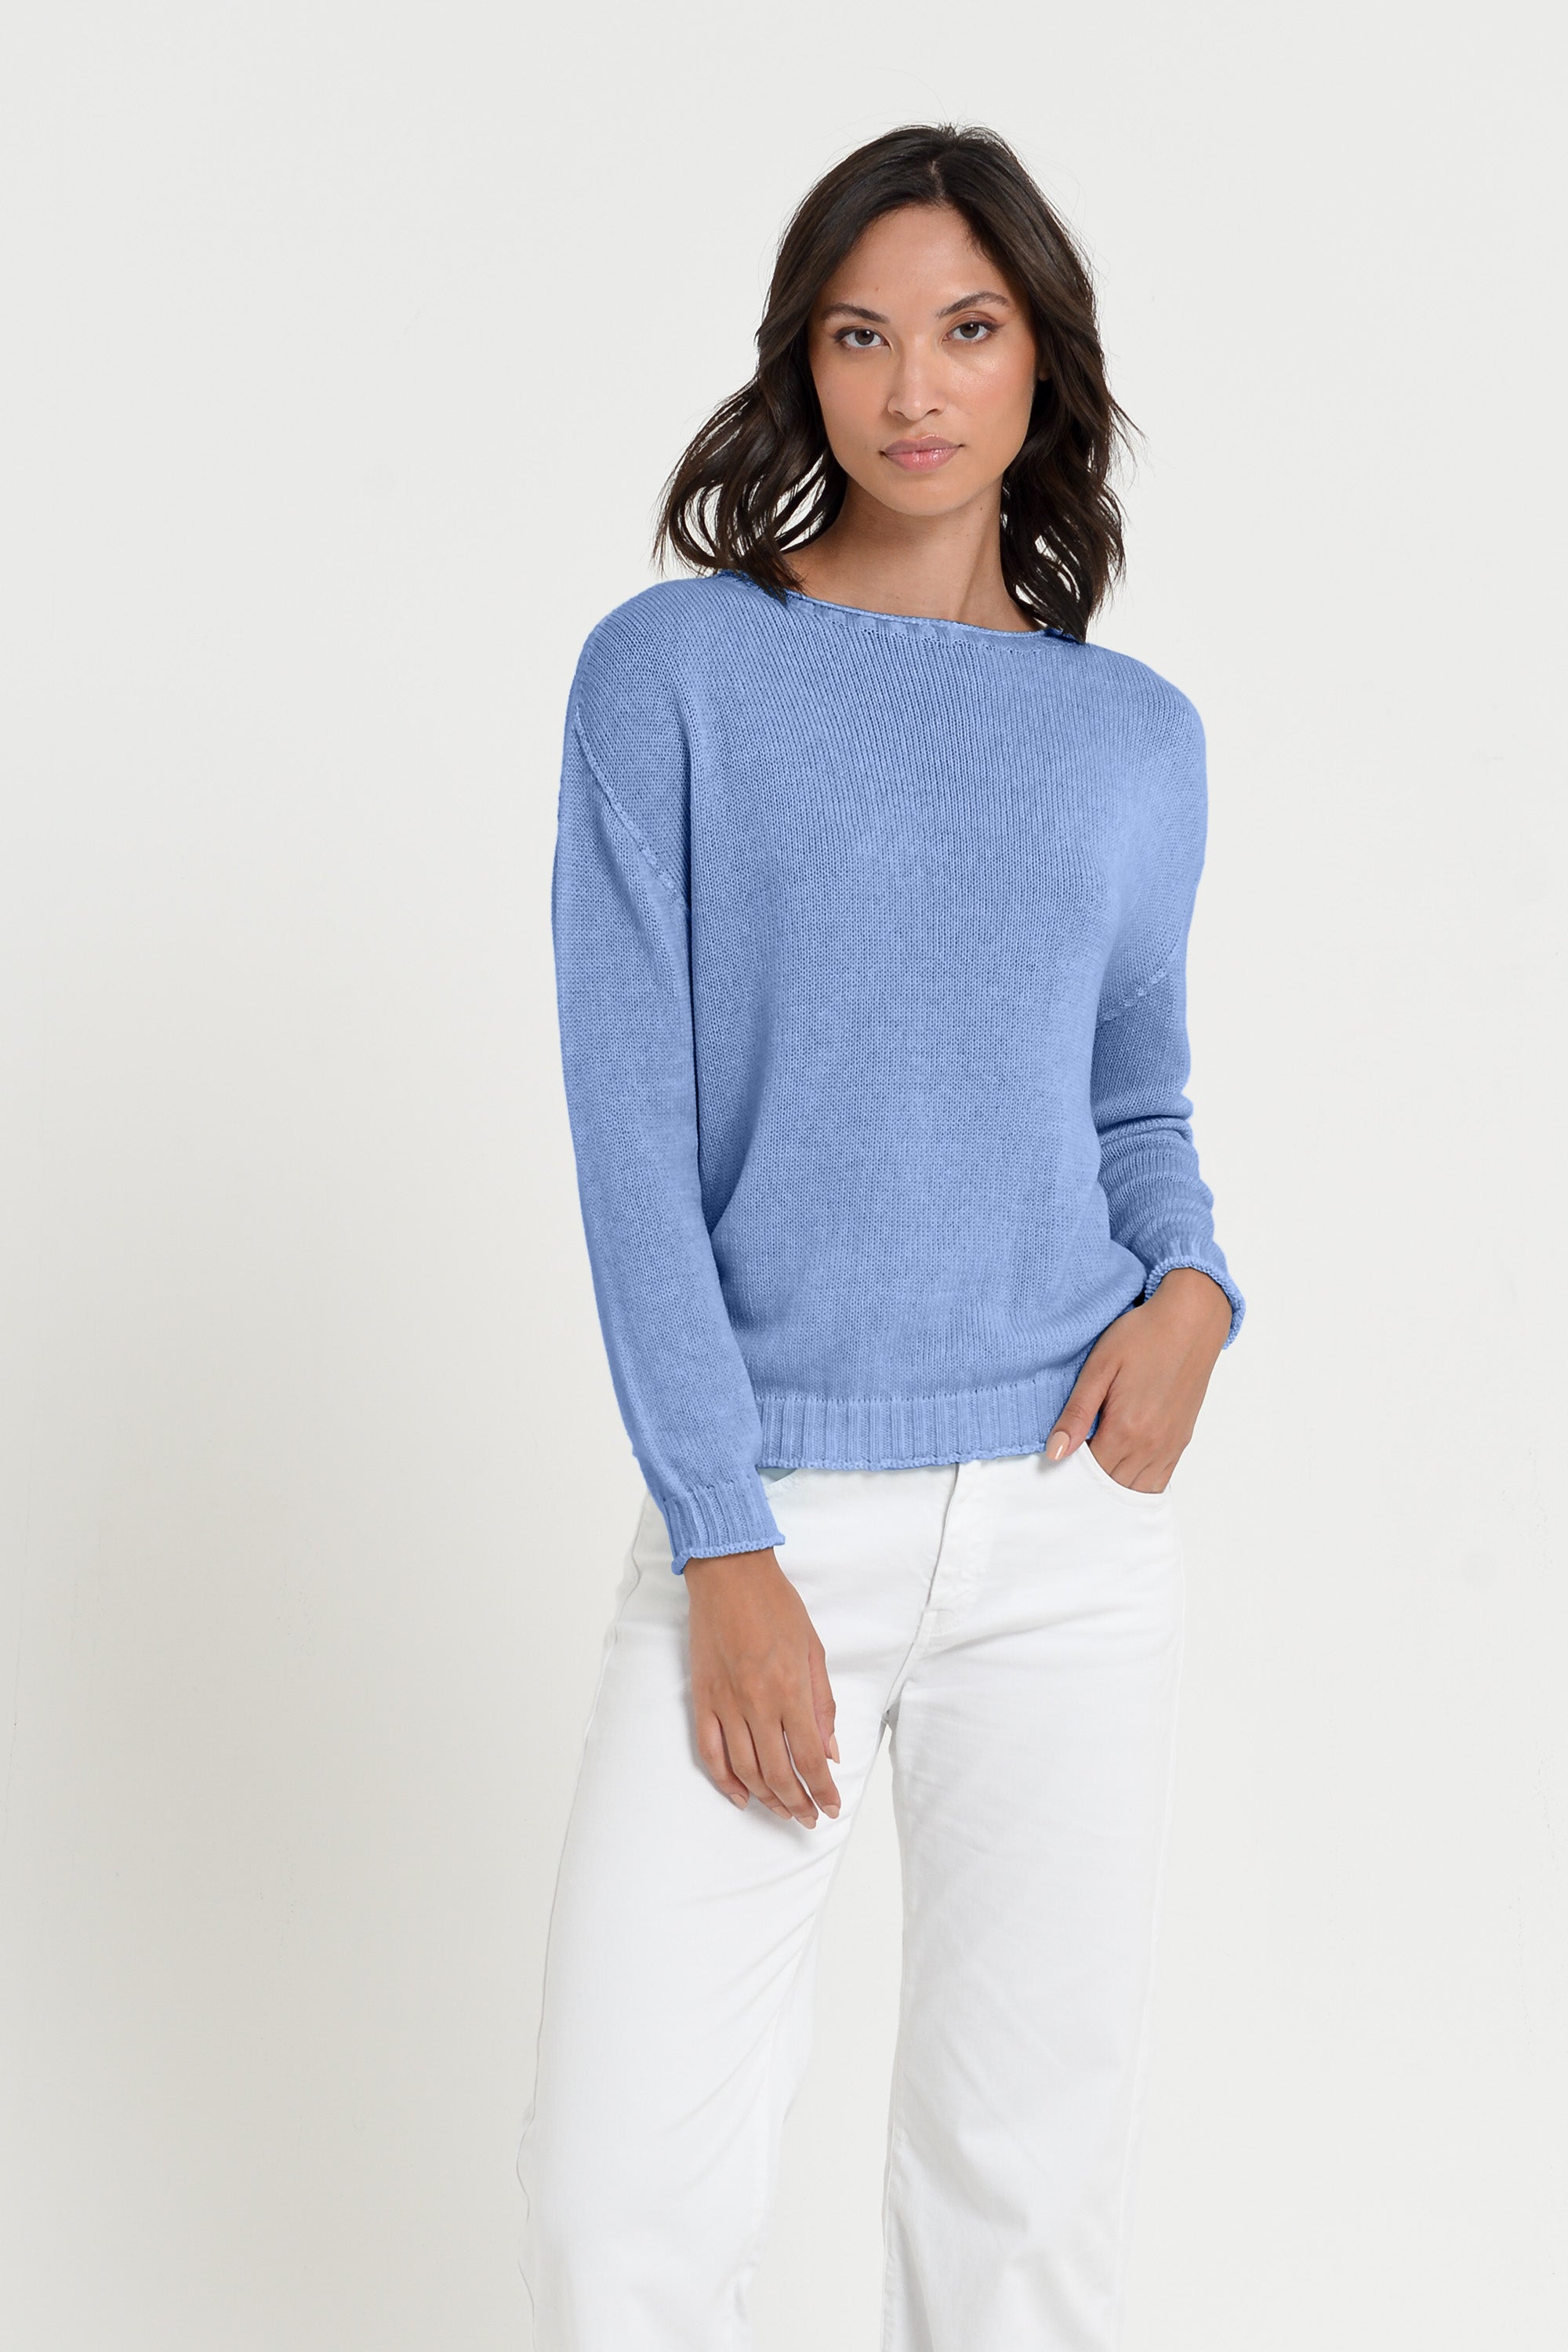 Vaze Knit - Women's Cotton Knit Sweater - Bay